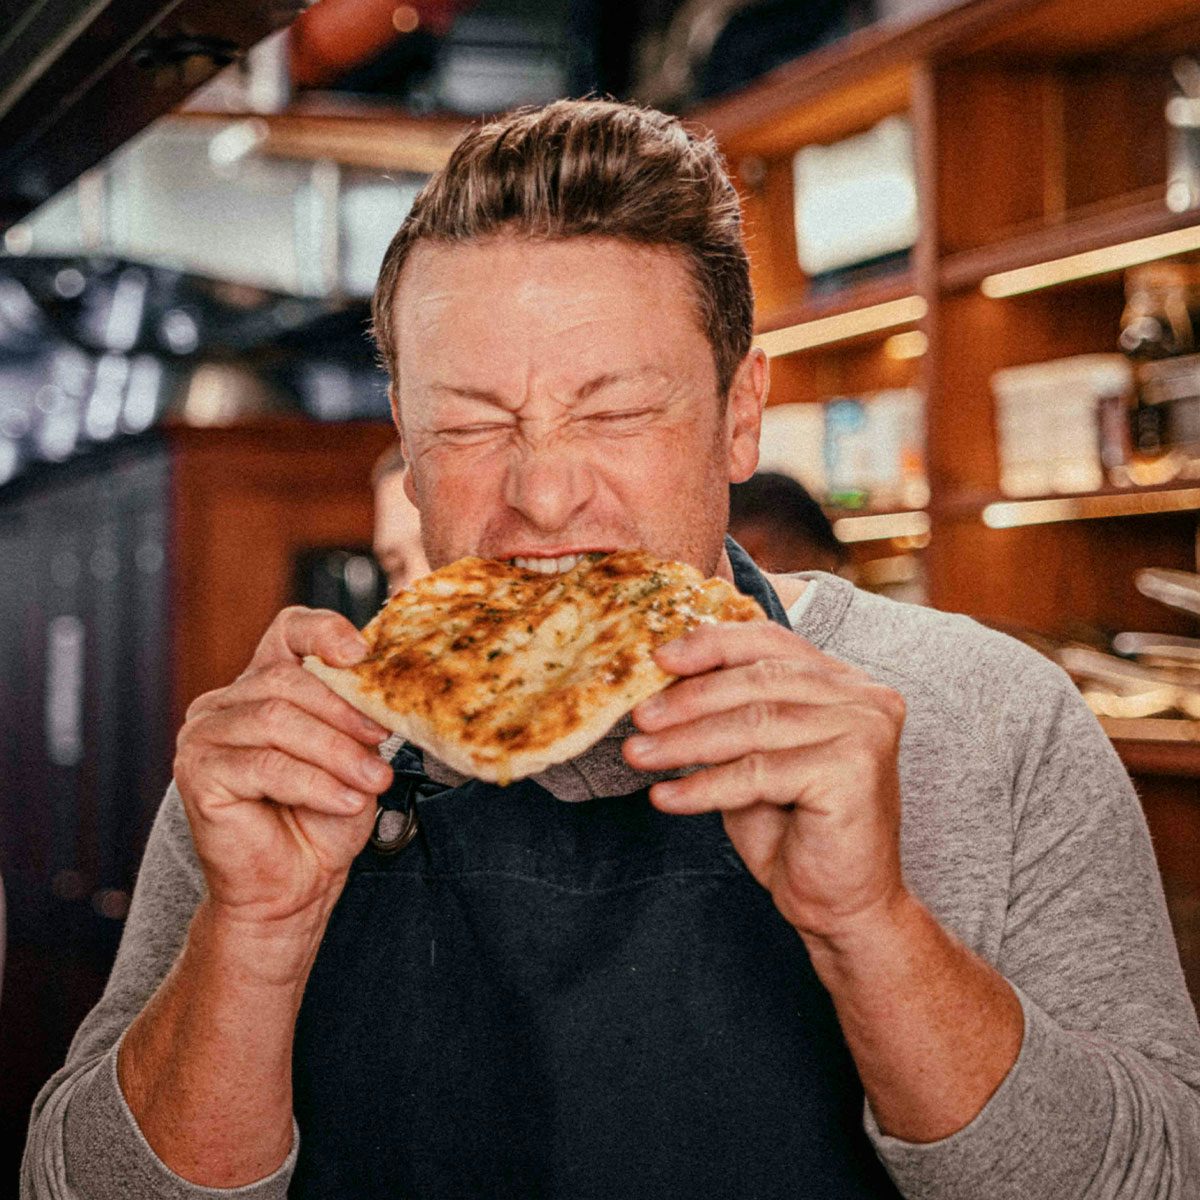 Image shows Jamie Oliver biting into food